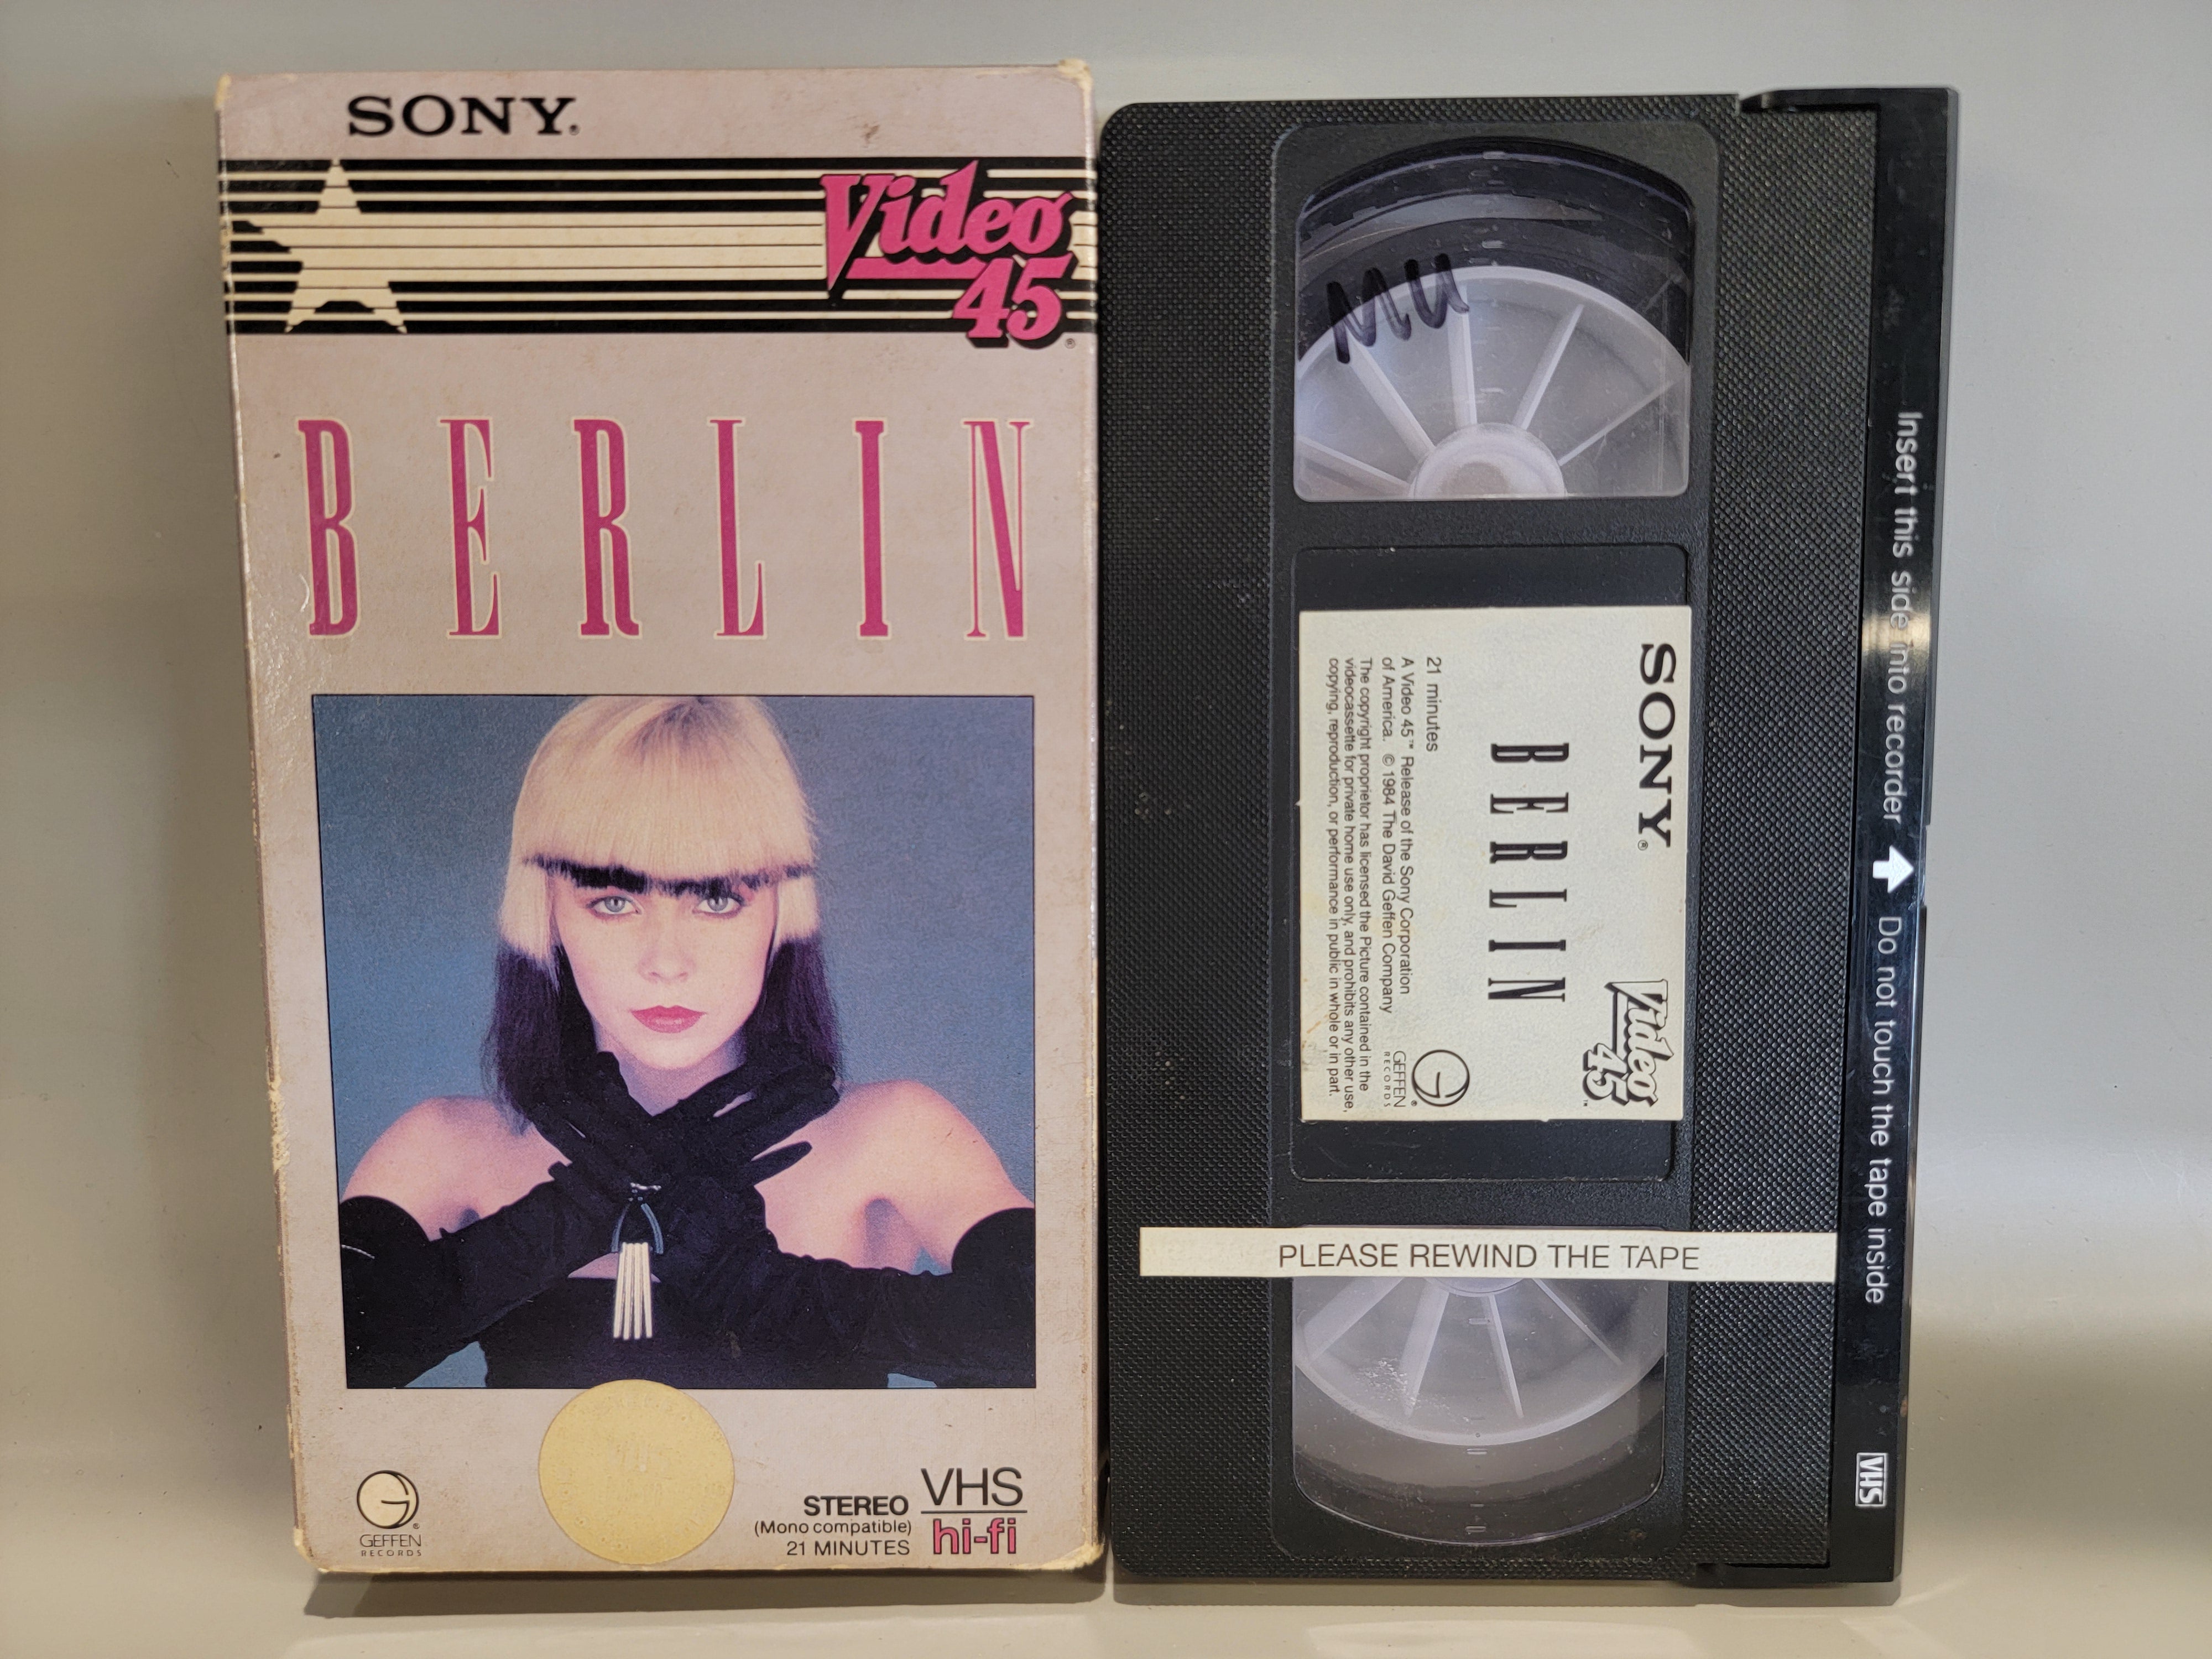 BERLIN: VIDEO 45 VHS [USED]